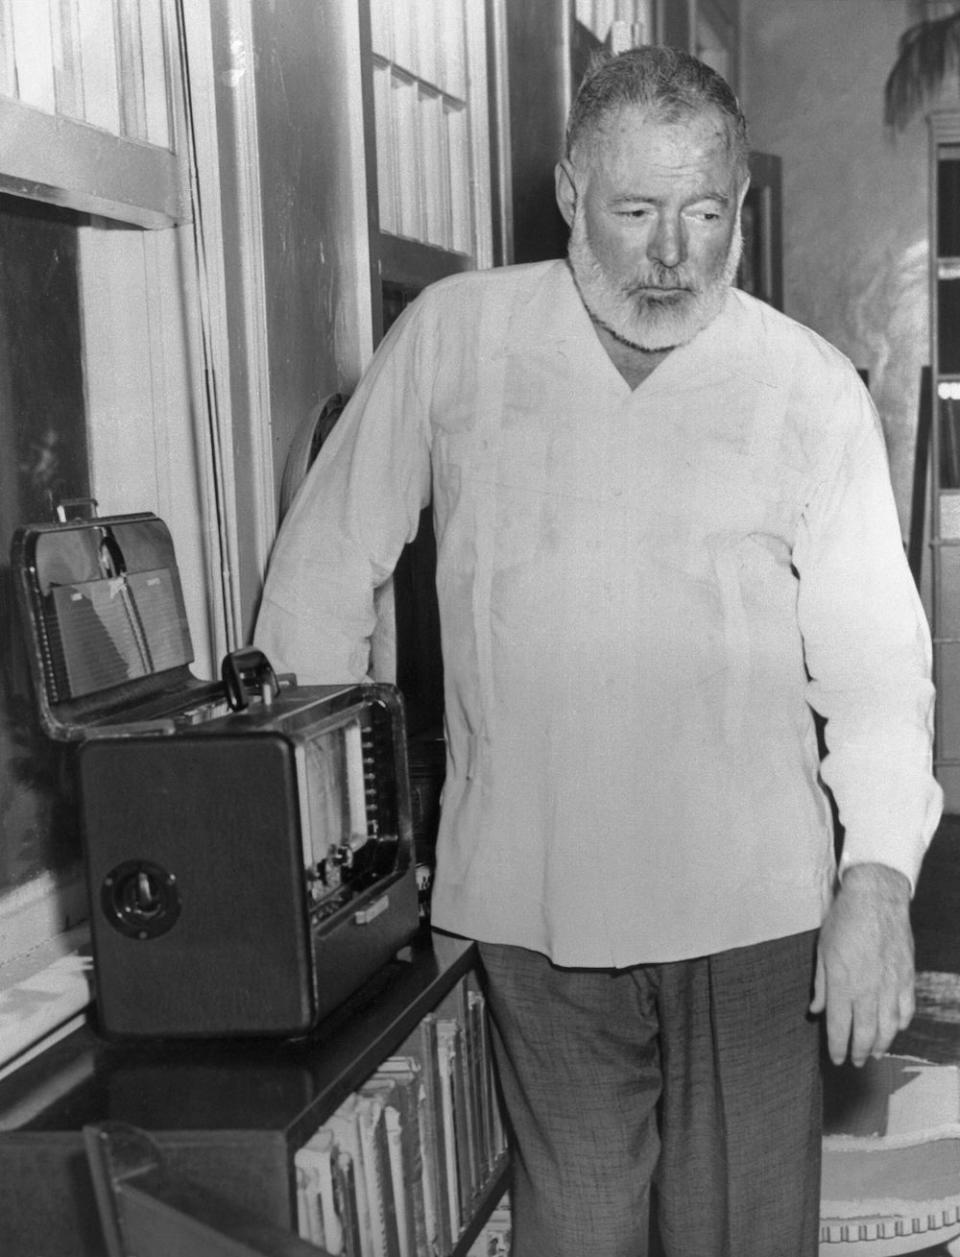 1954: Hemingway Wins